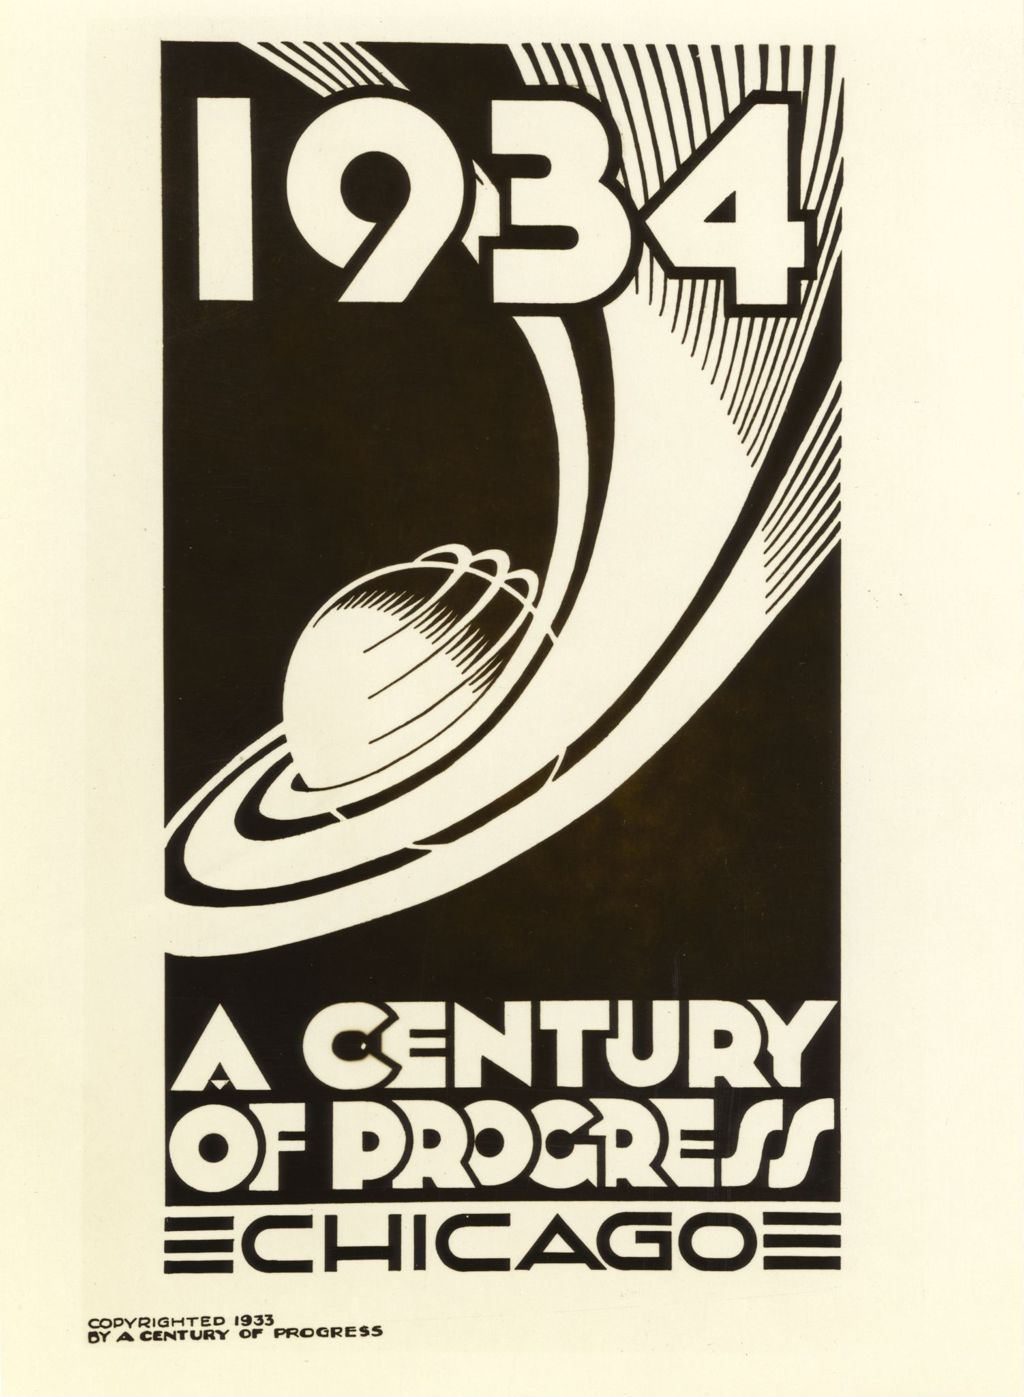 Miniature of The logo design for the 1934 Century of Progress International Exposition.